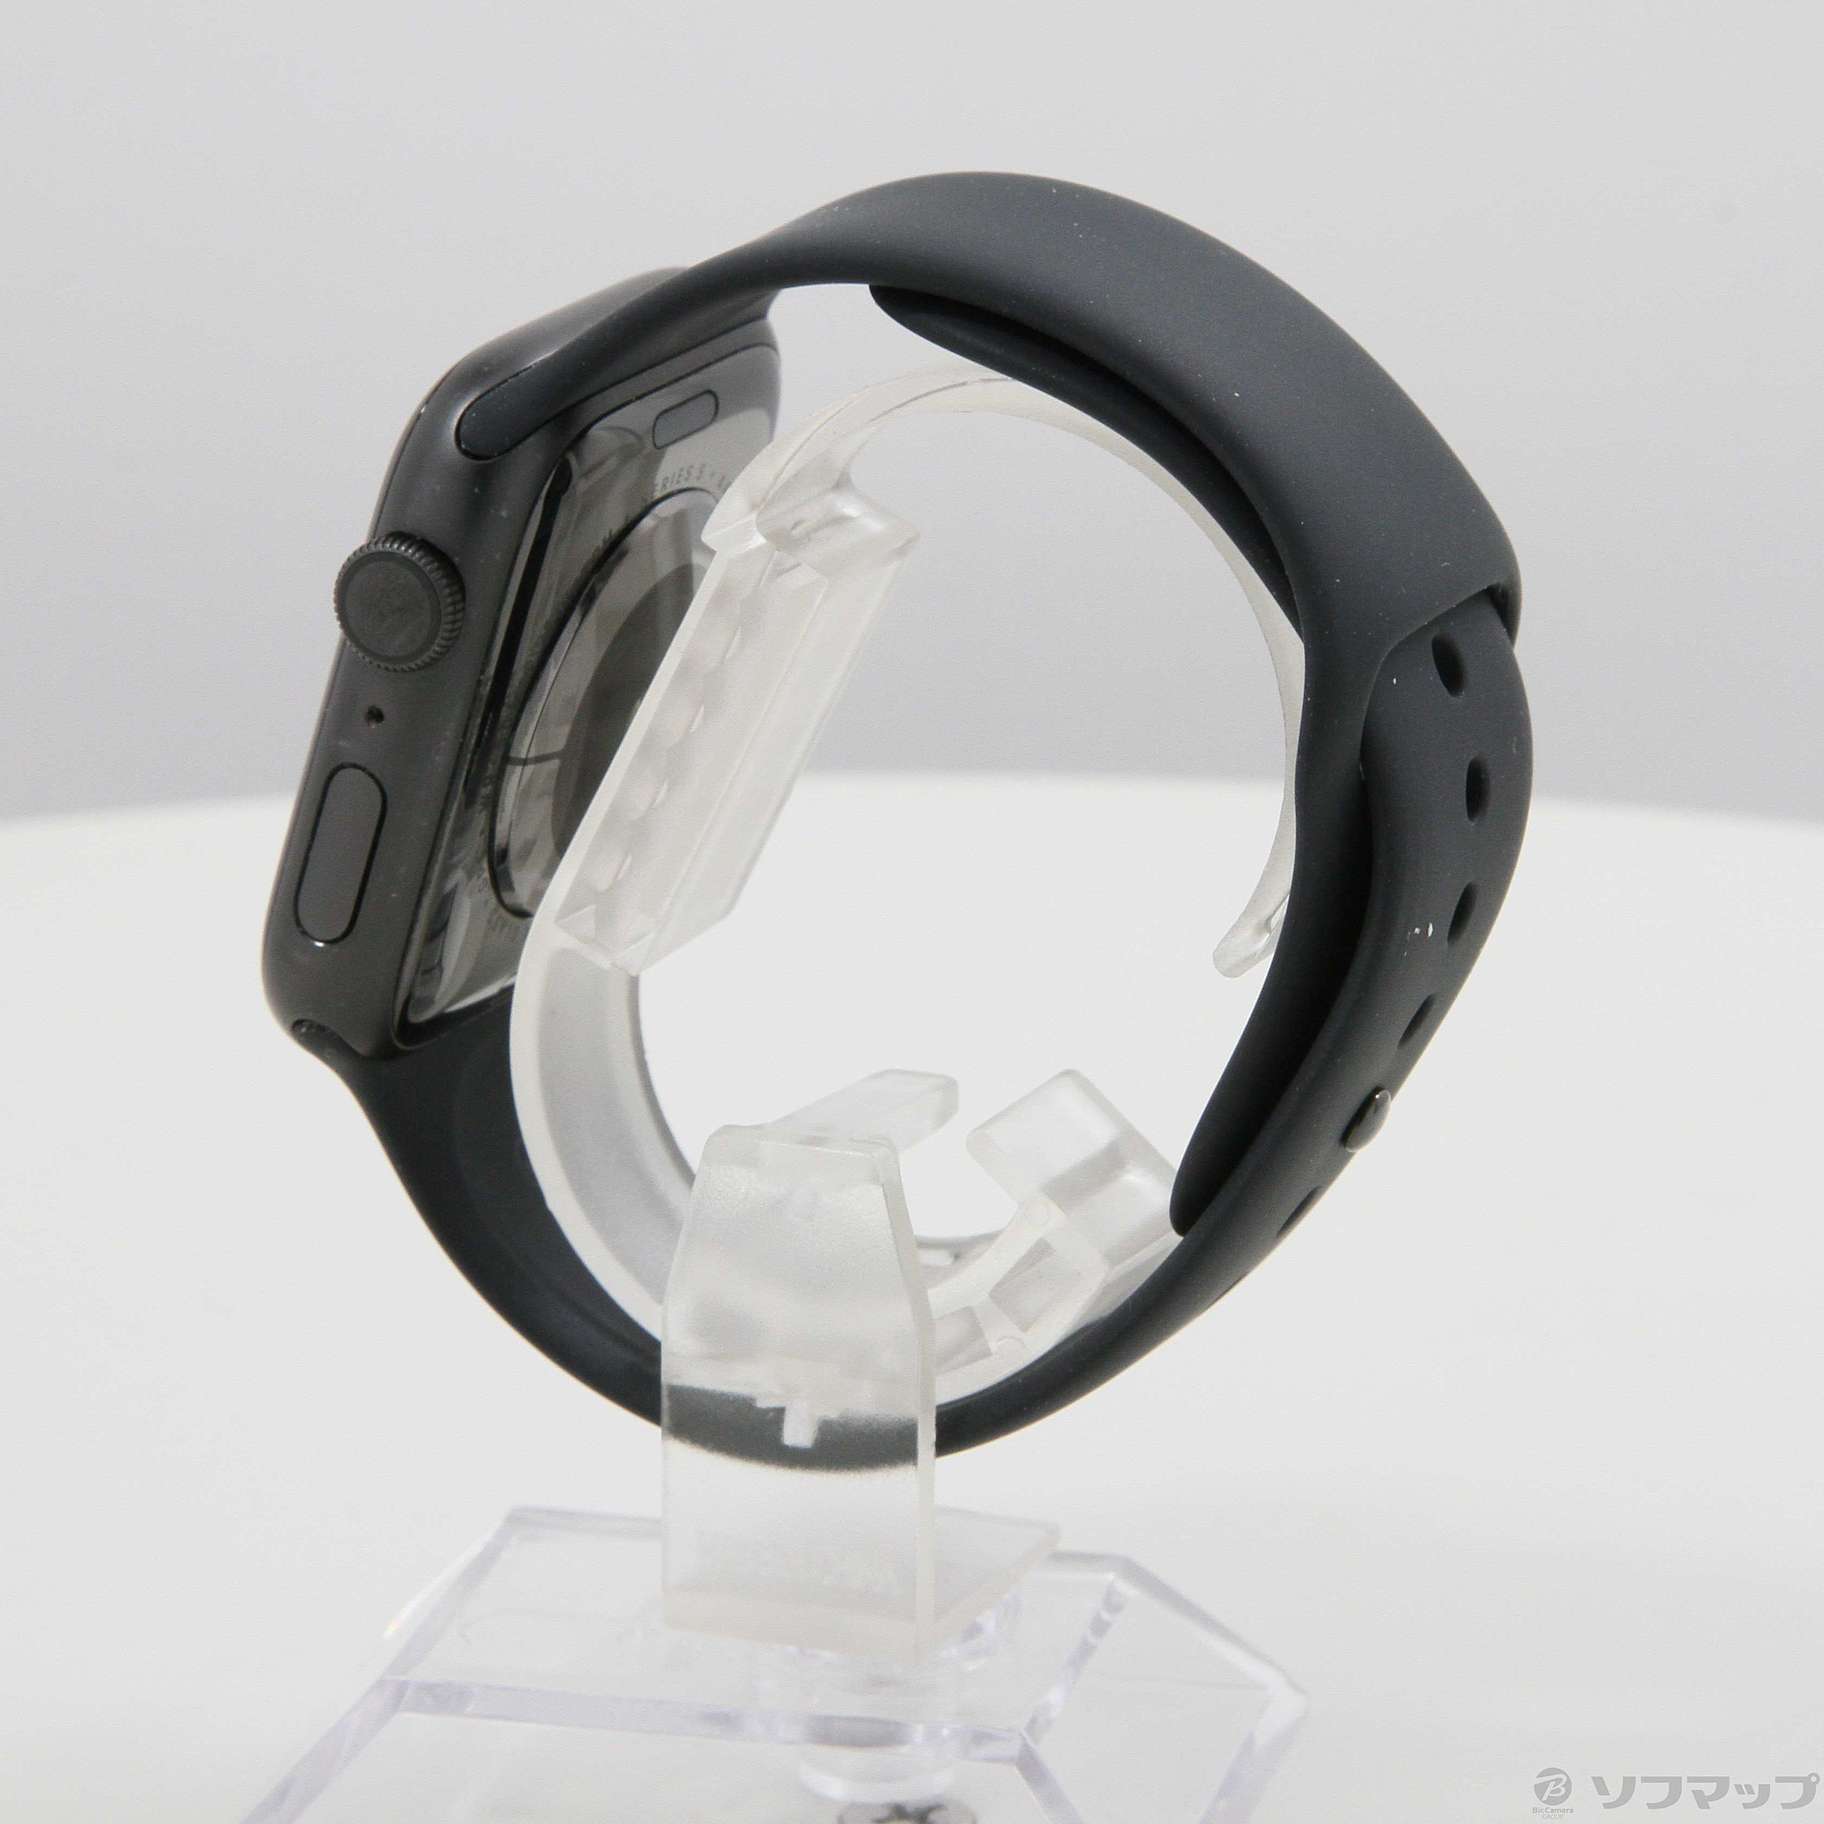 Apple Watch Series 5 Space Gray MWVF2J/A